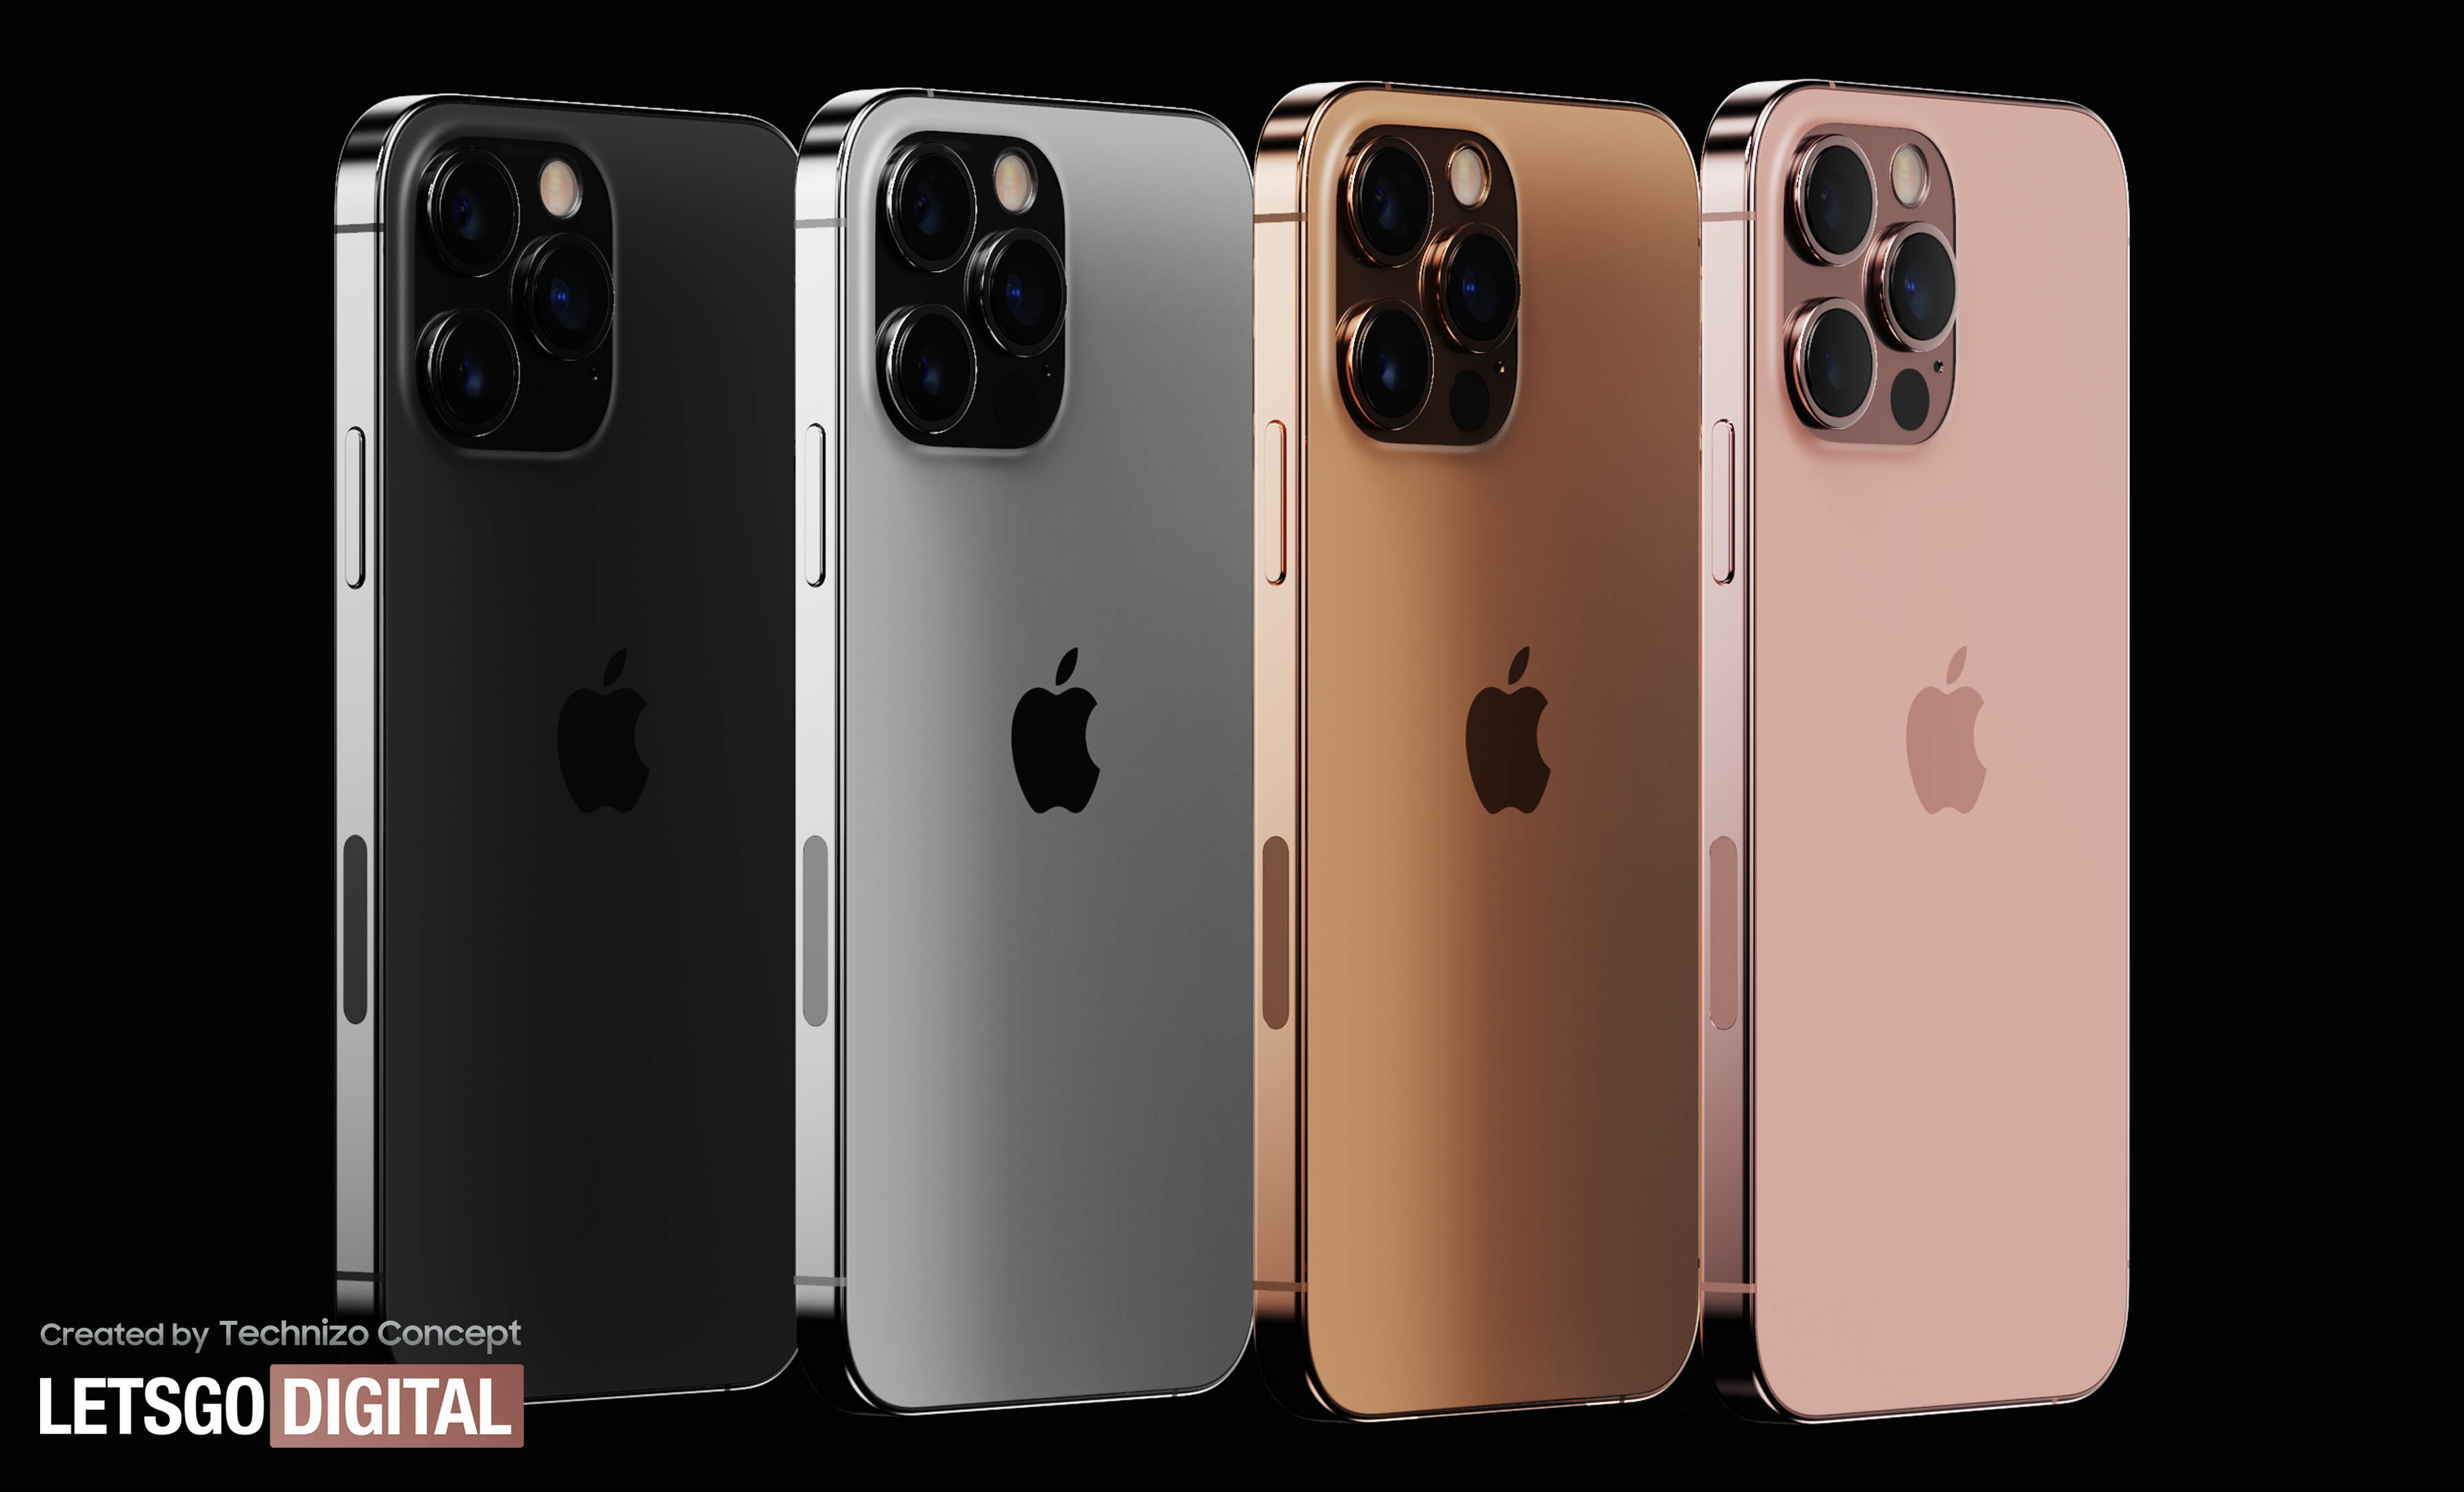 Iphone pro colors. Iphone 13 Pro. Iphone 13 Pro цвета. Ayfon 13 Pro Max. Apple iphone 13 Pro Max.